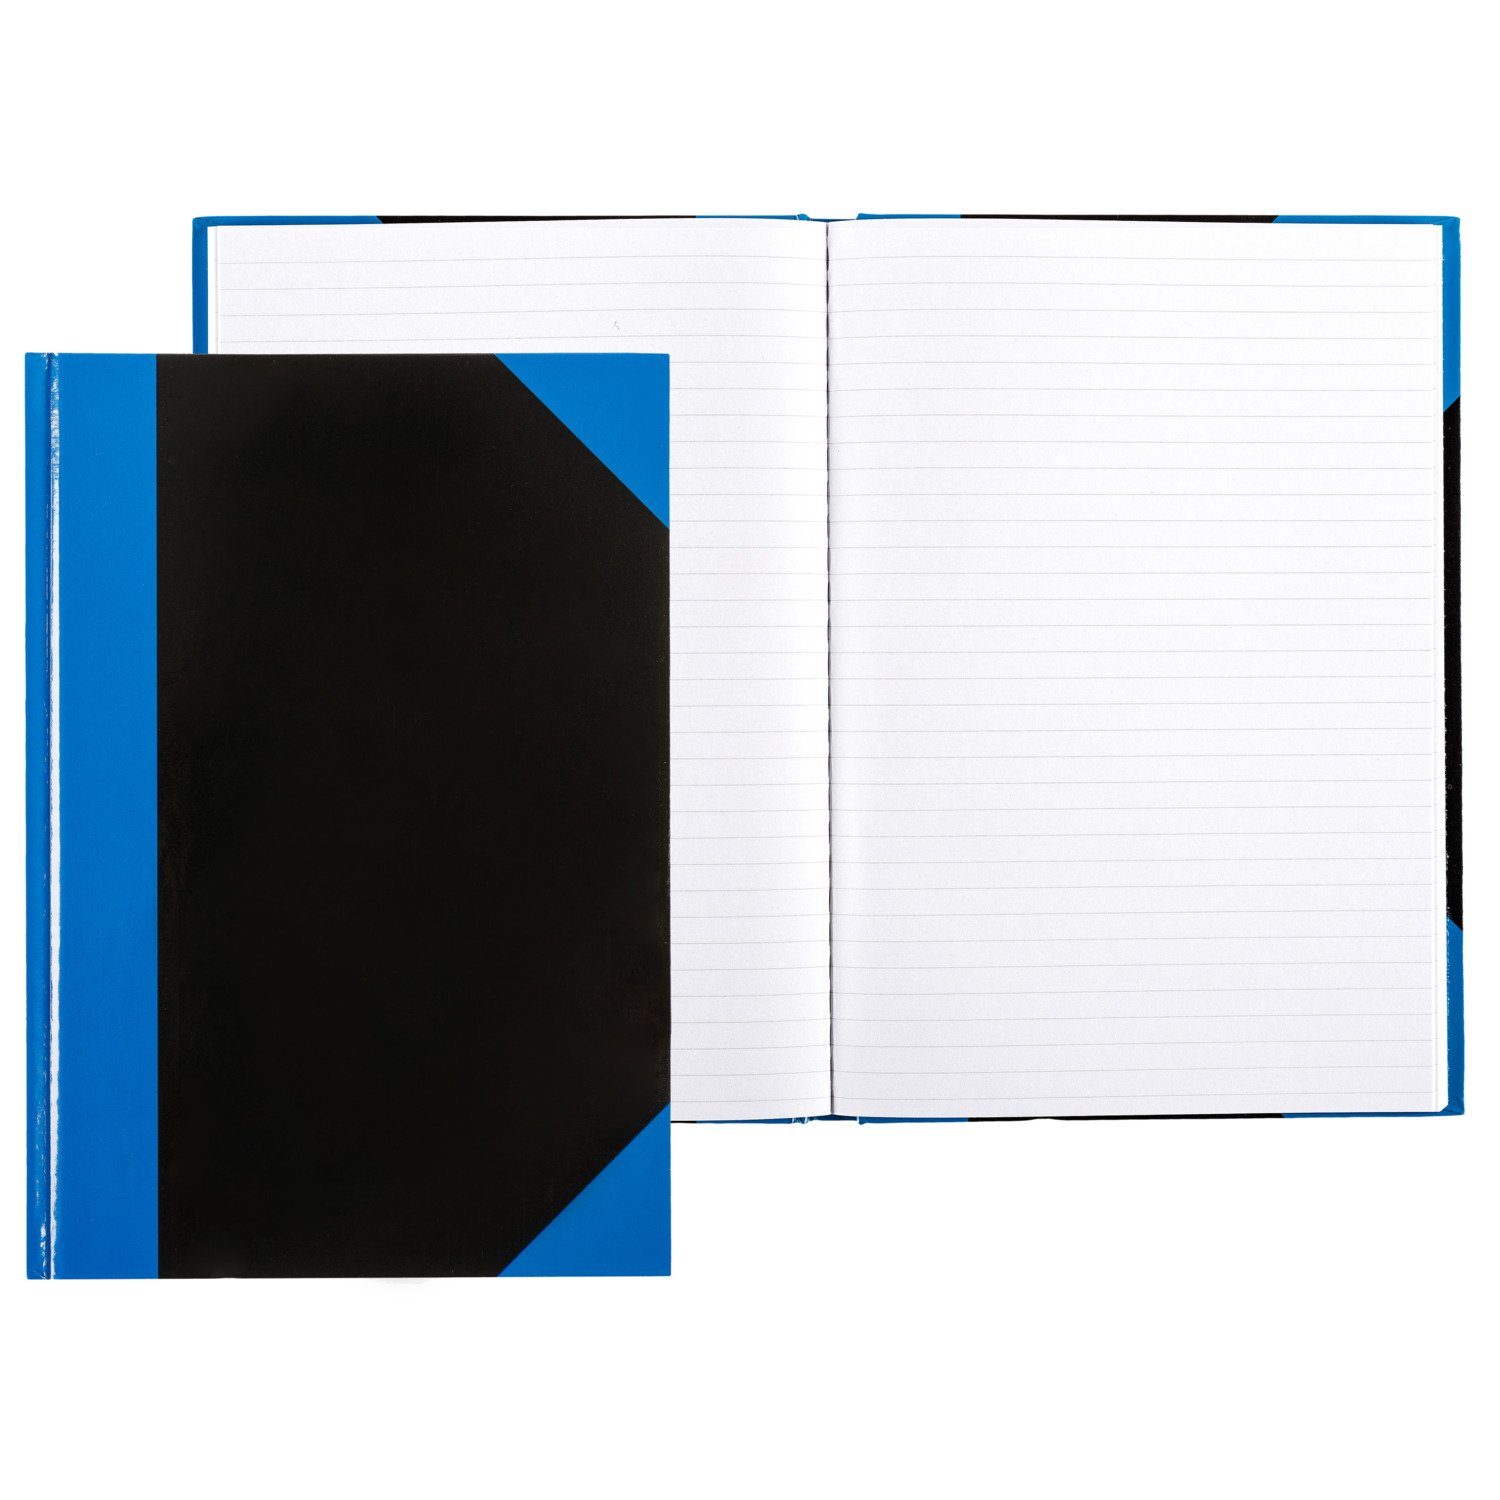 Idena Notizbuch Idena 10094 - Kladde DIN A6, 96 Blatt, 70 g/m², liniert, fester Einban